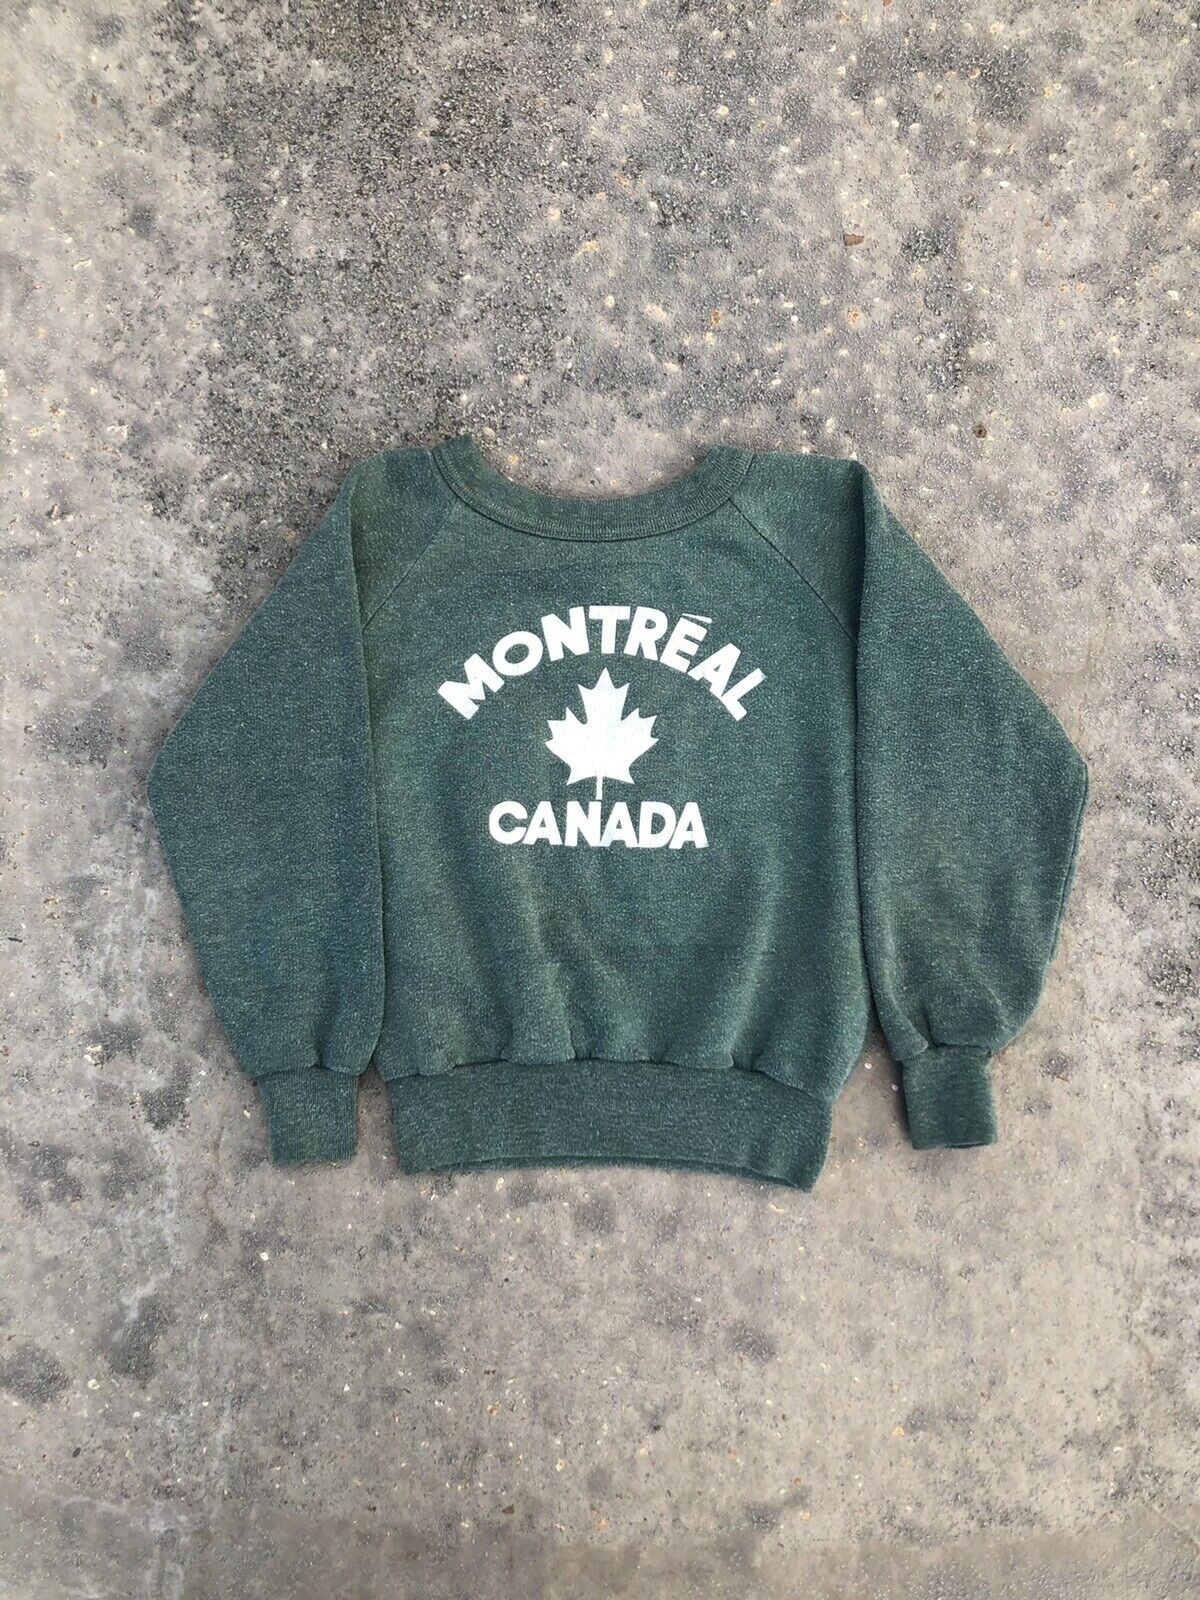 Vintage 60s 70s Montreal Canada Youth M Sweatshirt